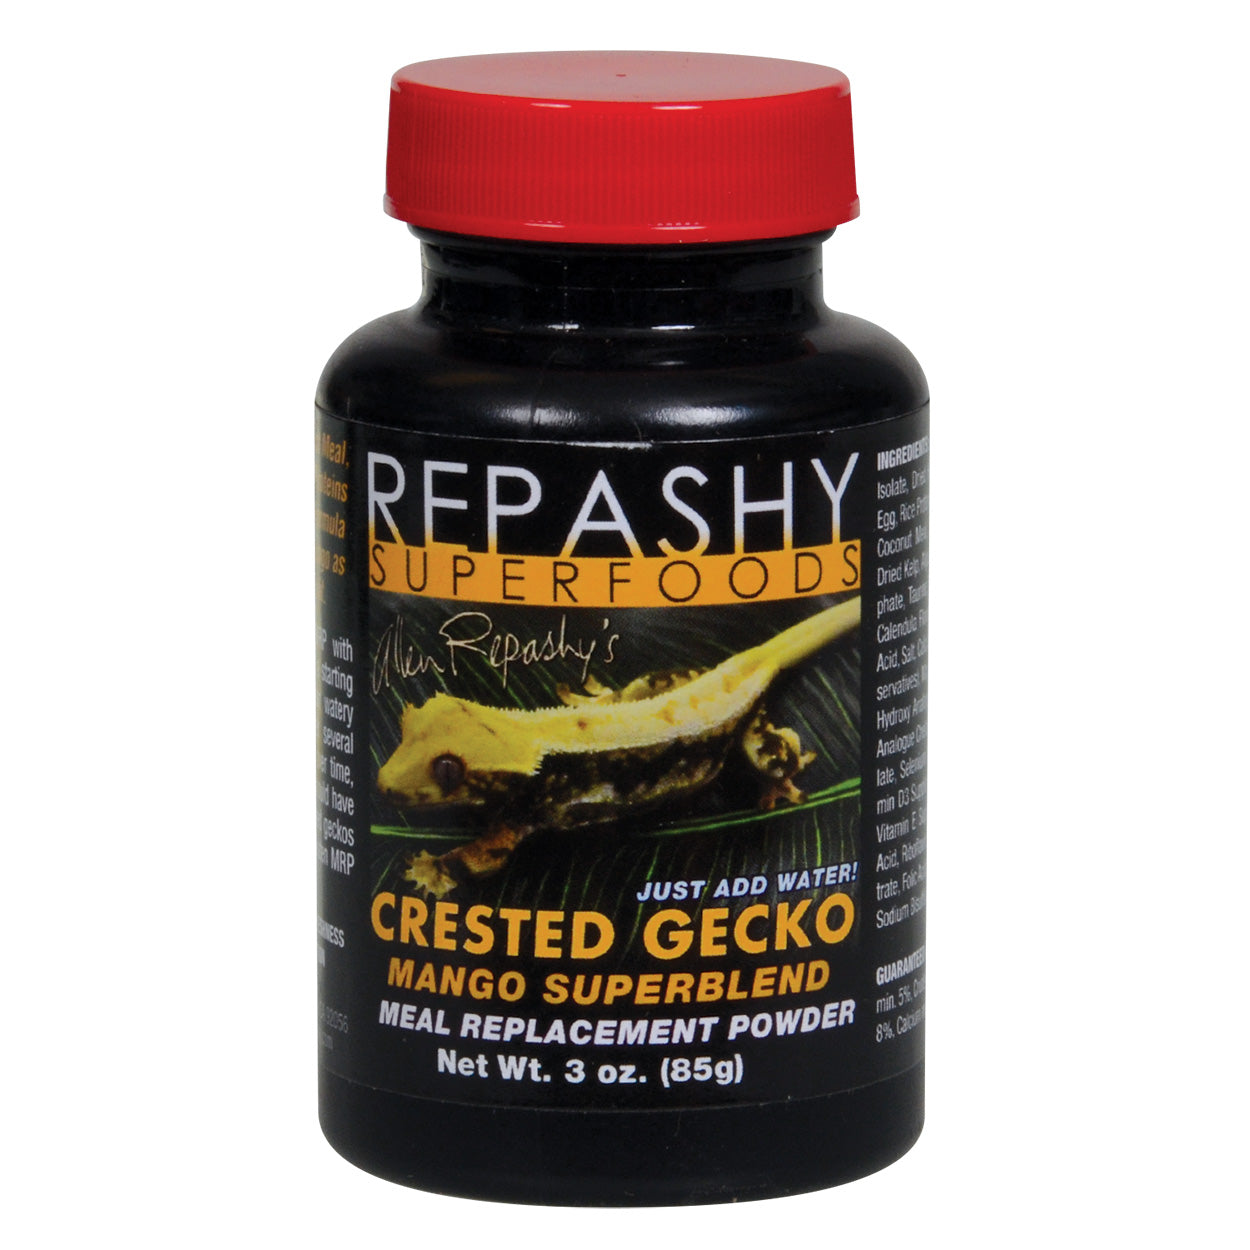 Repashy Crested Gecko Mango Superblend Diet - 3 oz